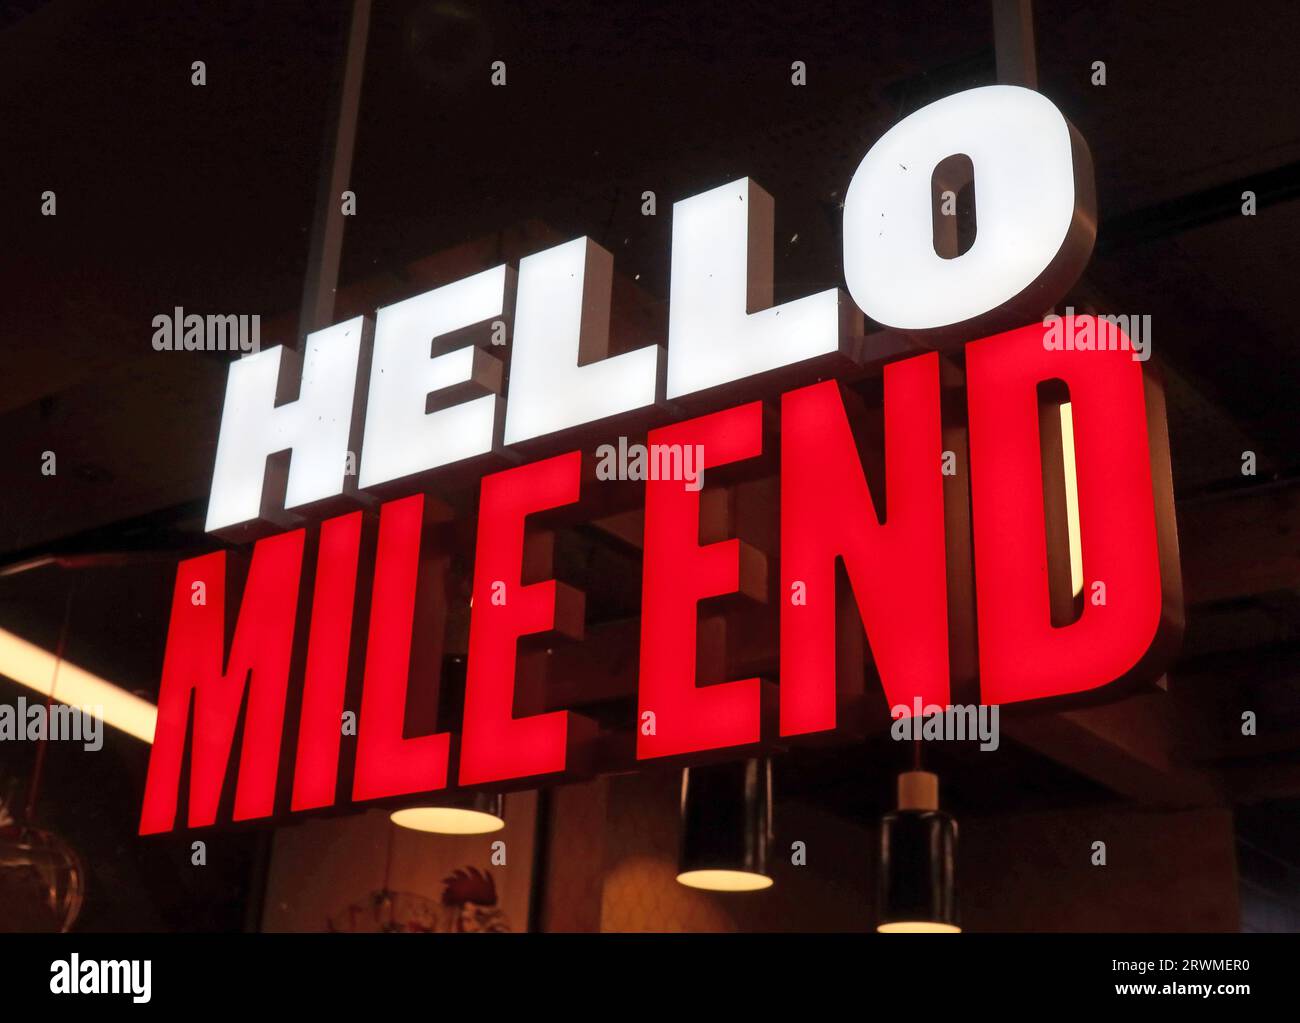 Hello Mile End, KFC, 381 Mile End Rd, Bow, London, England, UK,  E3 4QS Stock Photo